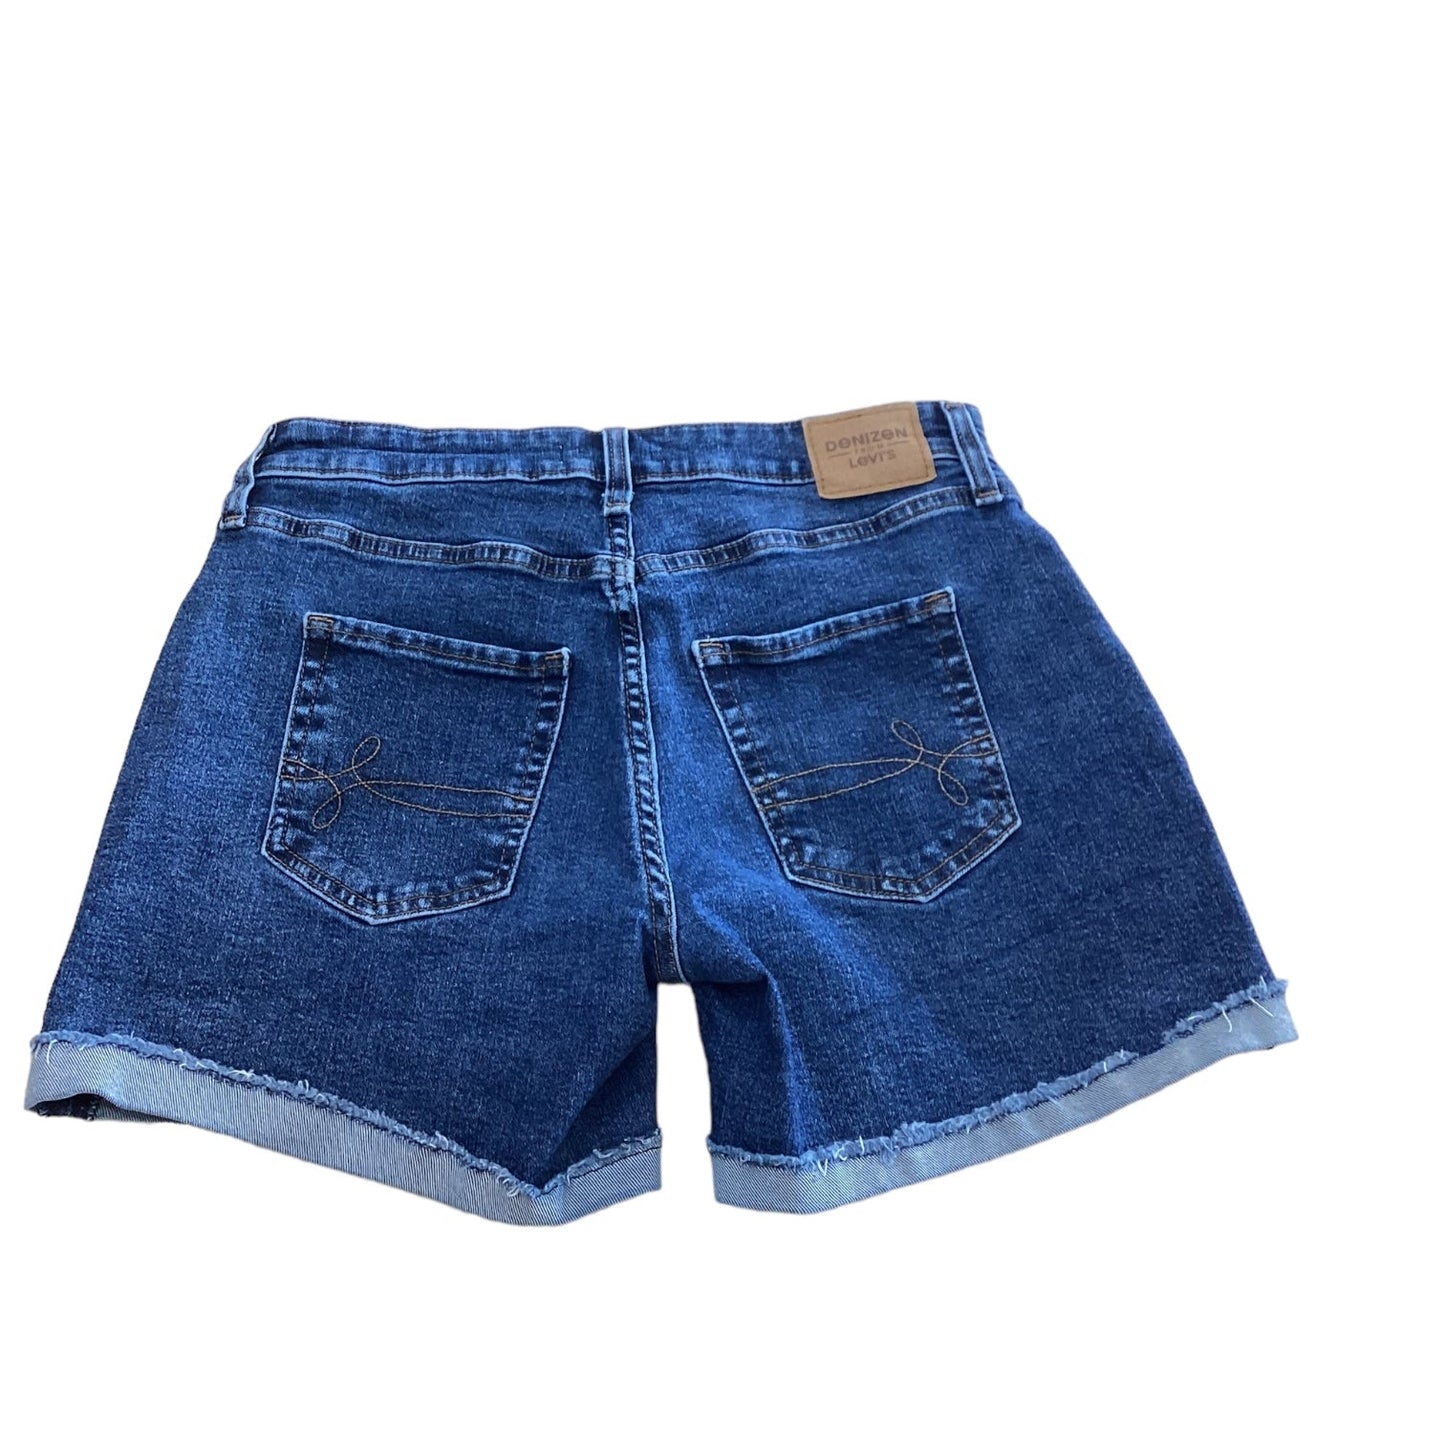 Blue Denim Shorts Denizen By Levis, Size 4